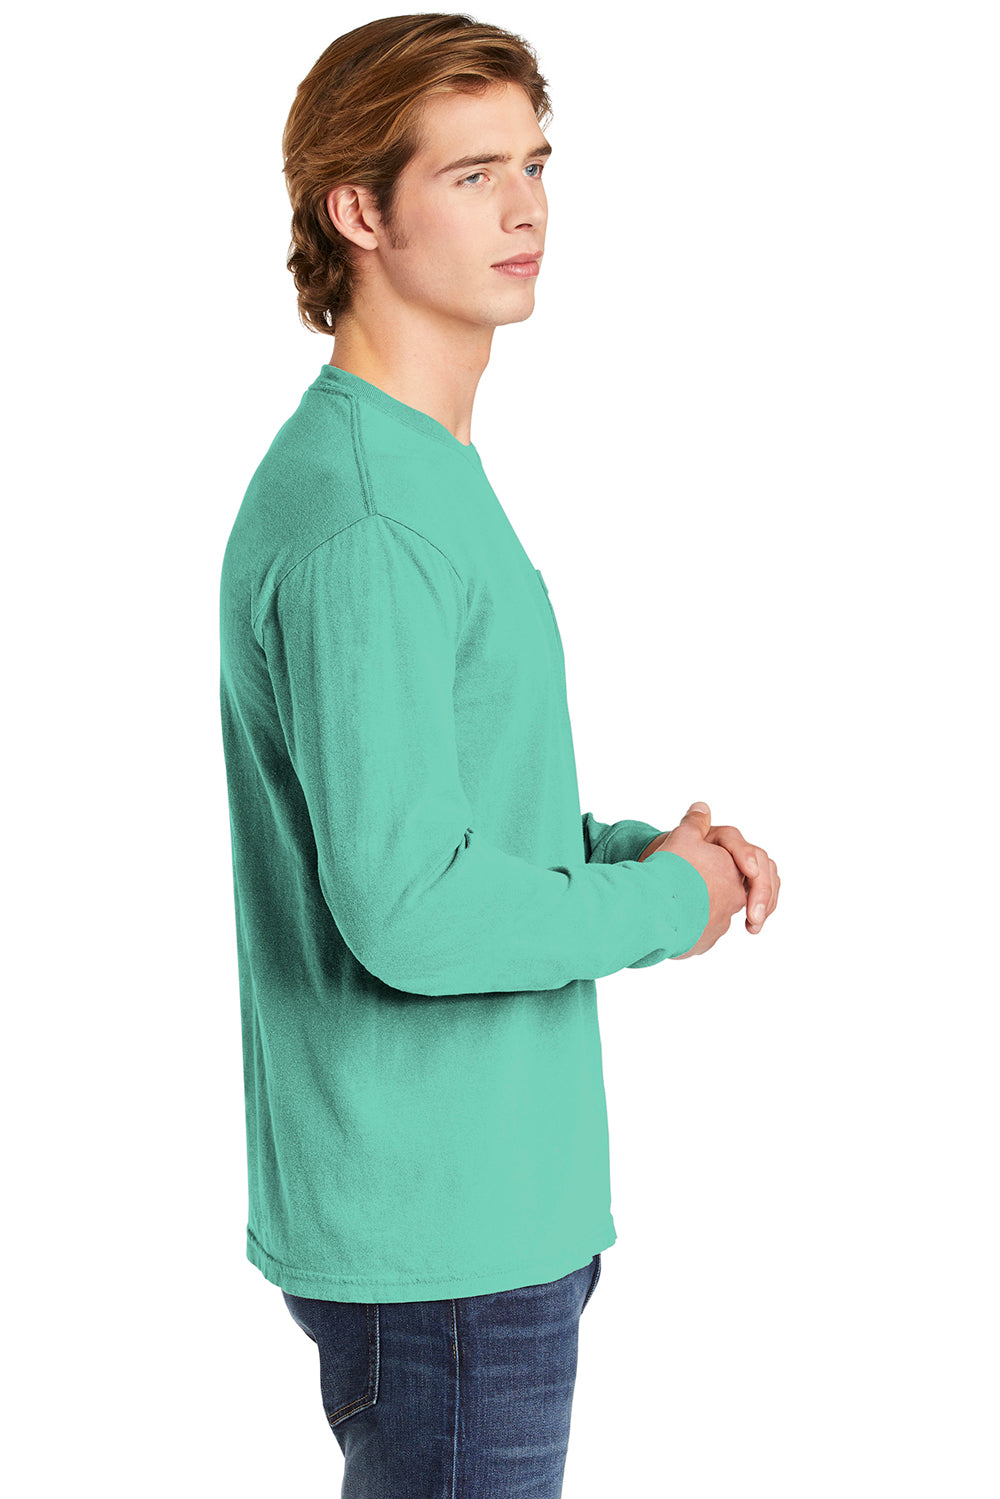 Comfort Colors 4410/C4410 Mens Long Sleeve Crewneck T-Shirt w/ Pocket Chalky Mint Green Side